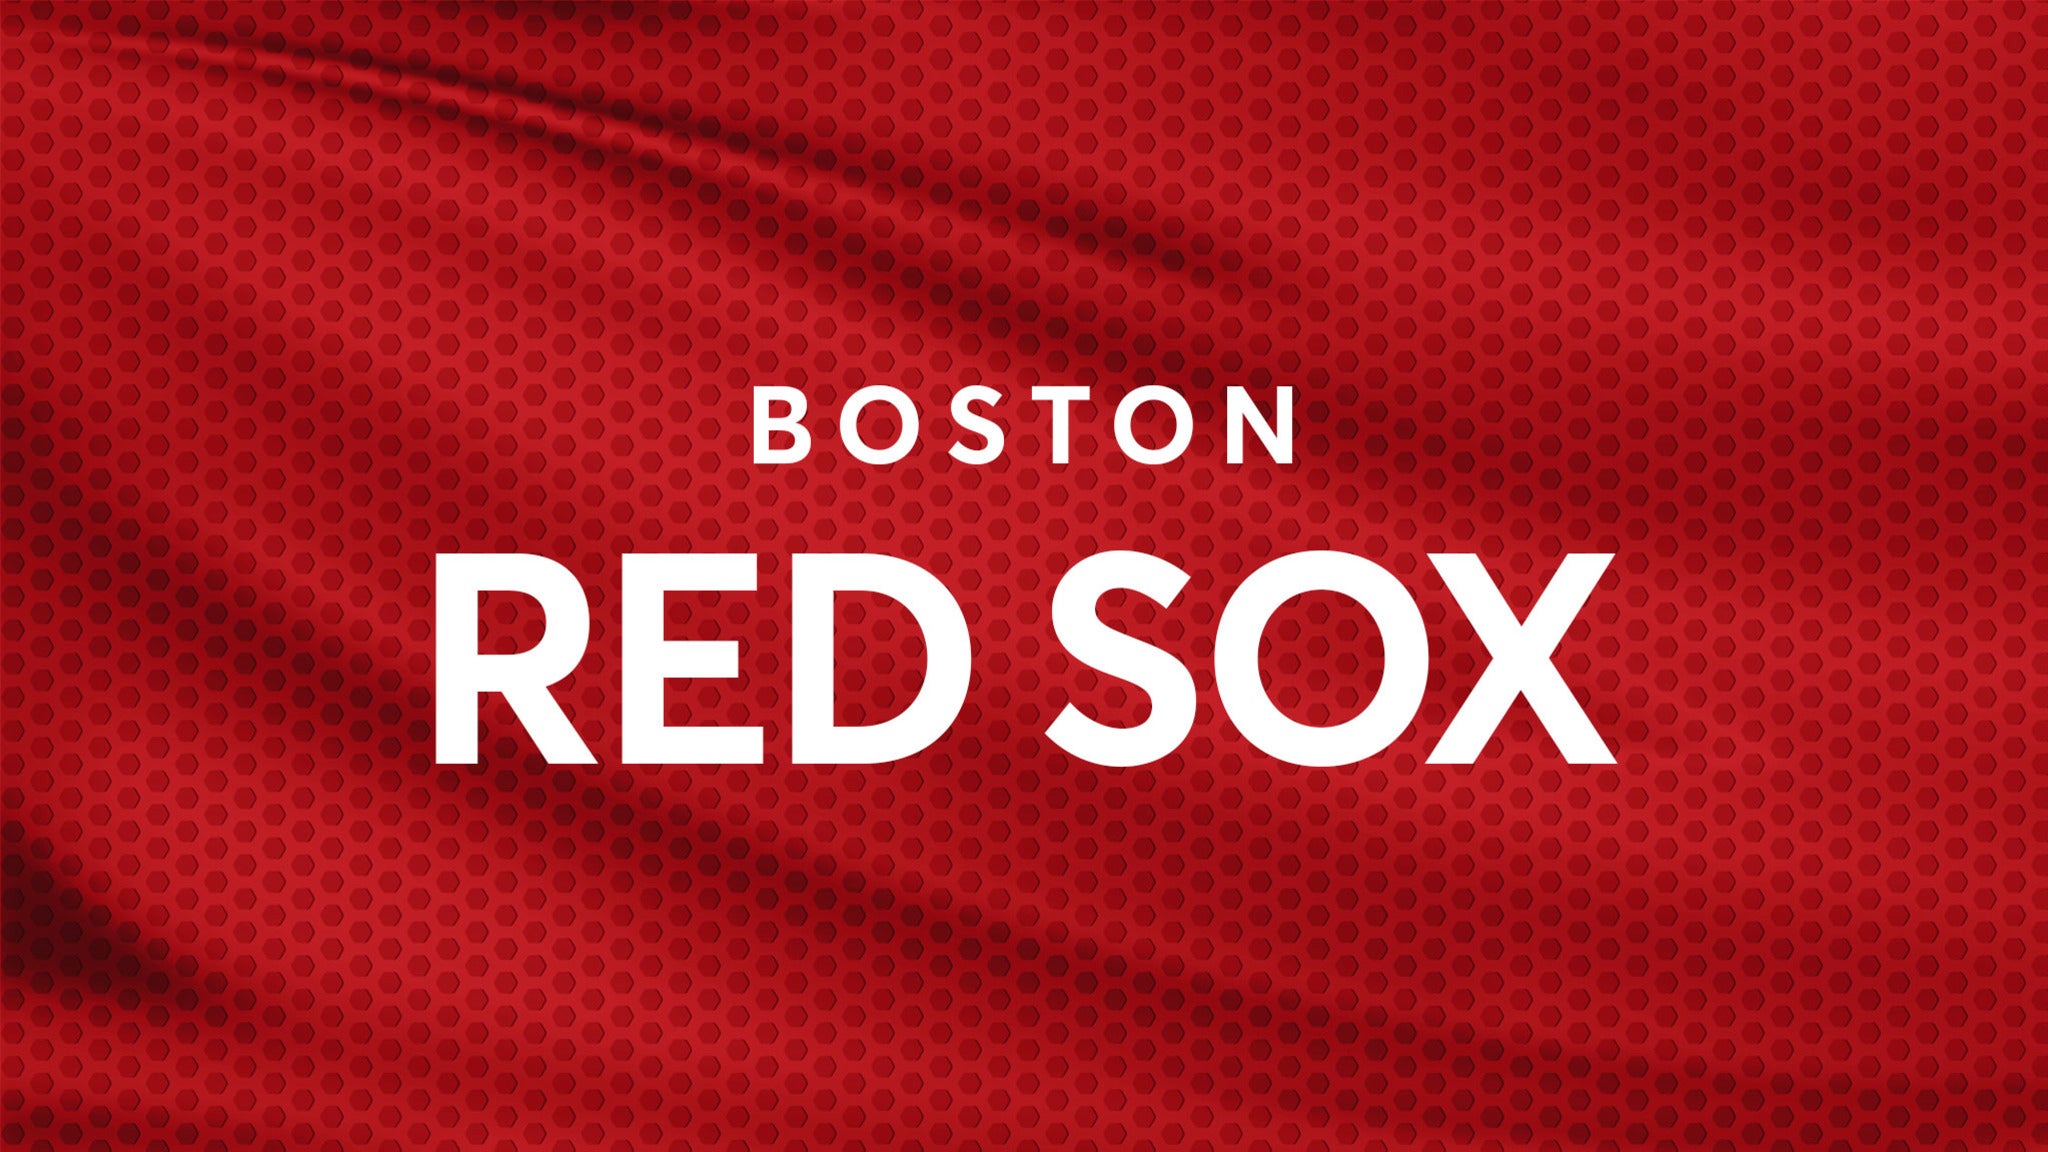 Boston Red Sox vs. Northeastern Huskies Baseball